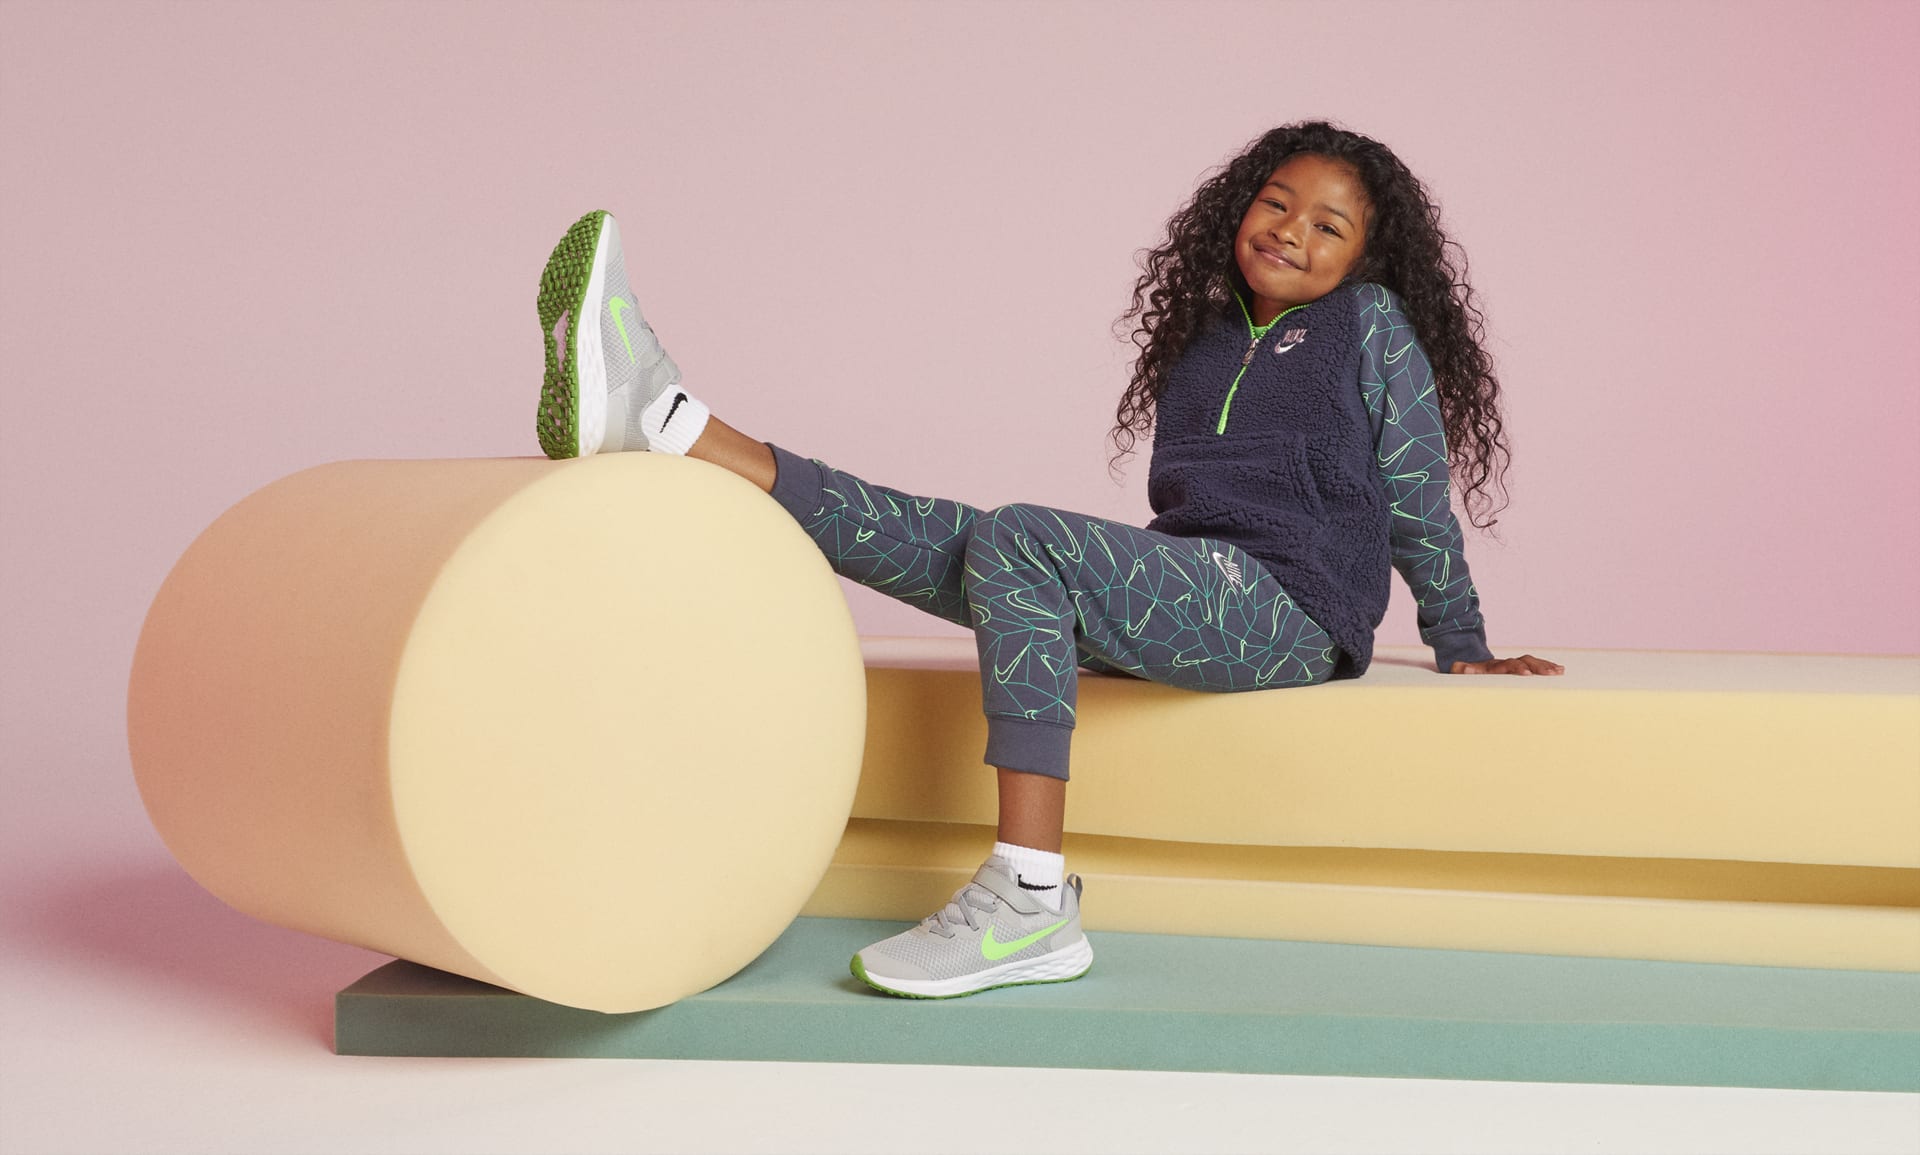 Nike Big Kids' Revolution 6 Running Shoes